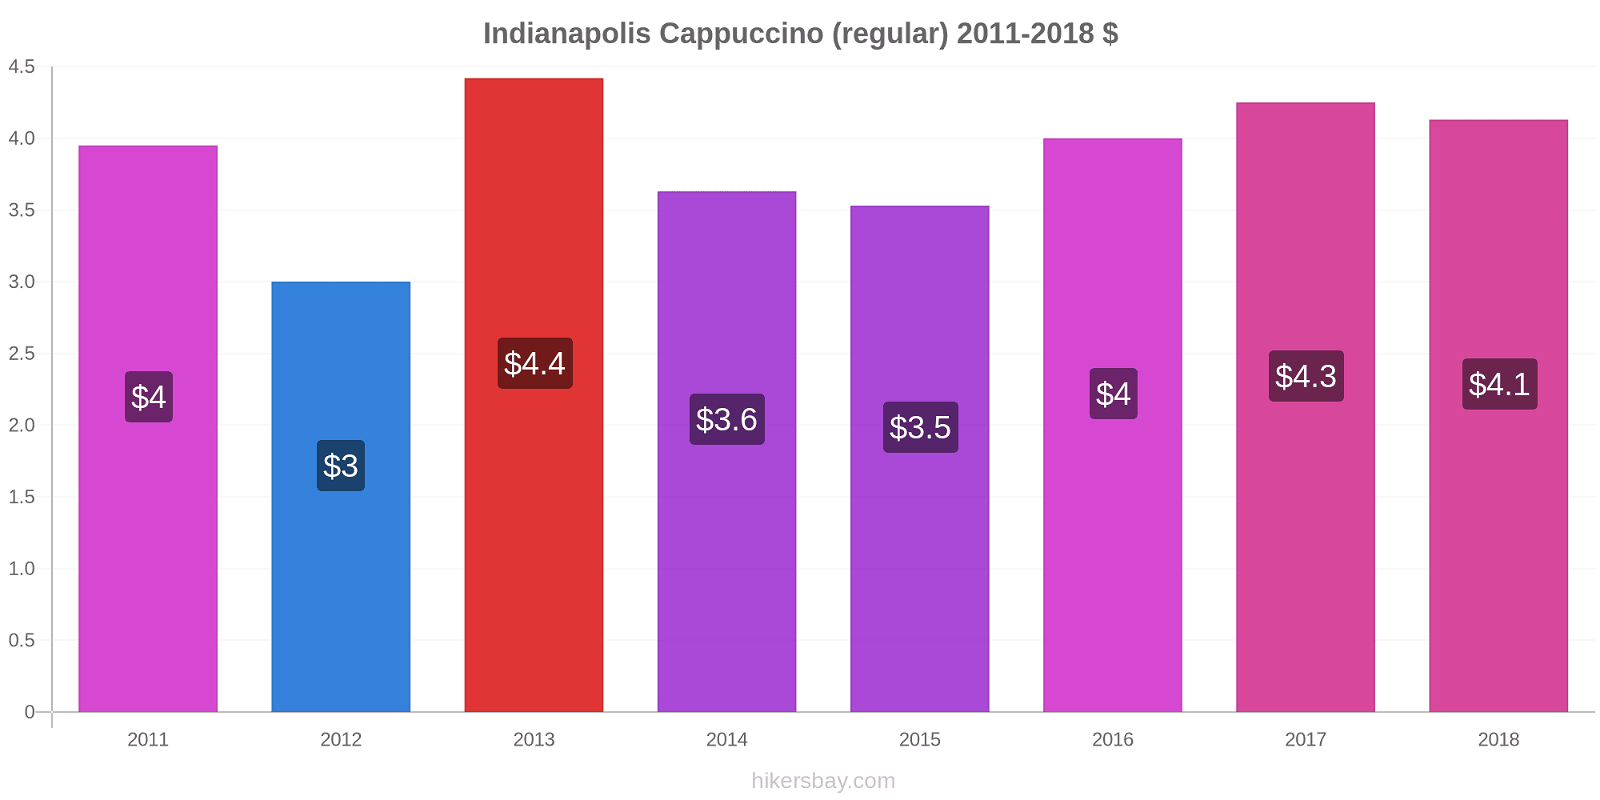 Indianapolis price changes Cappuccino (regular) hikersbay.com